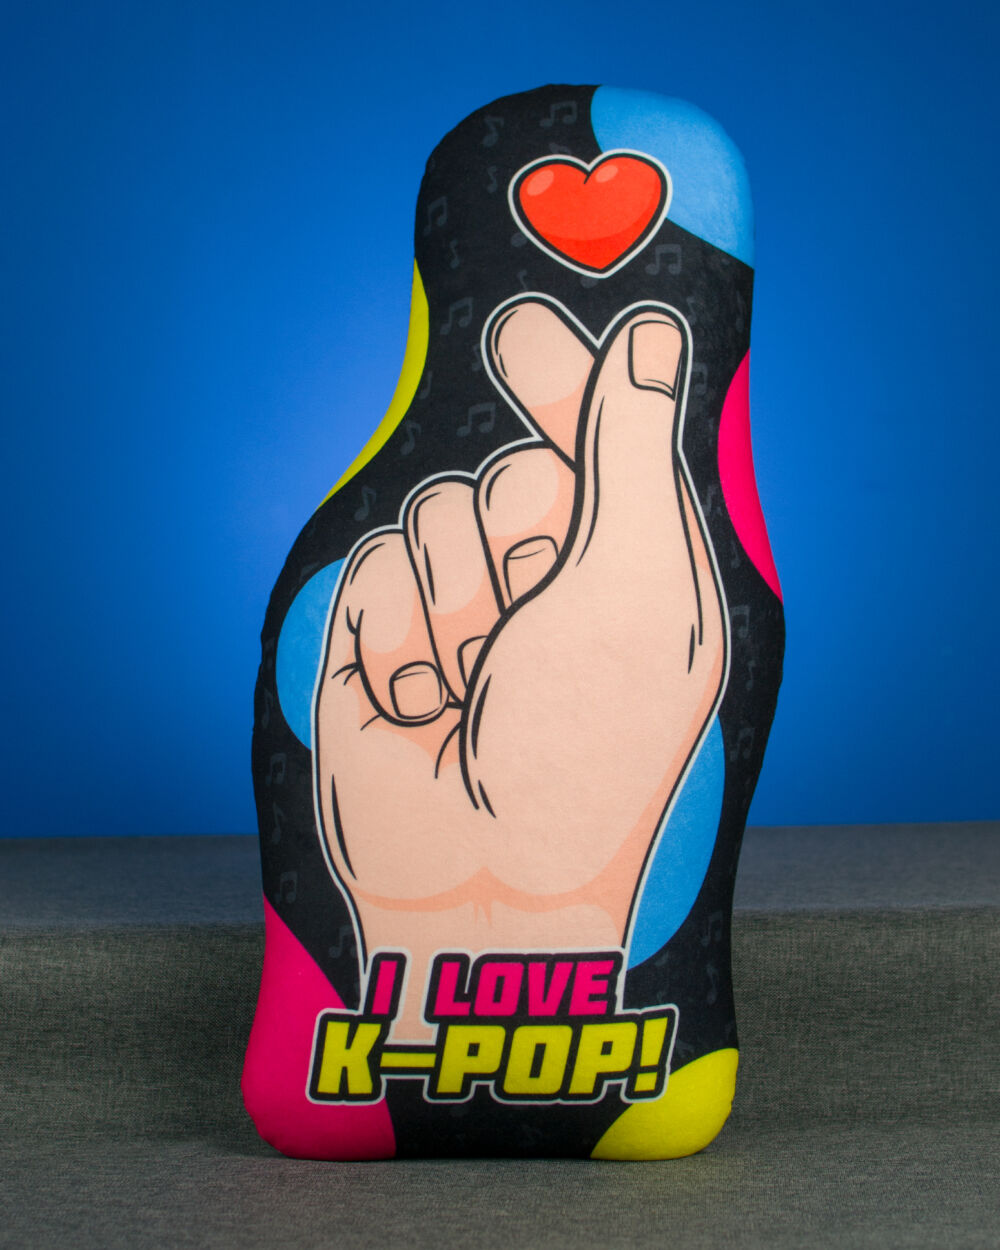 I love K-Pop